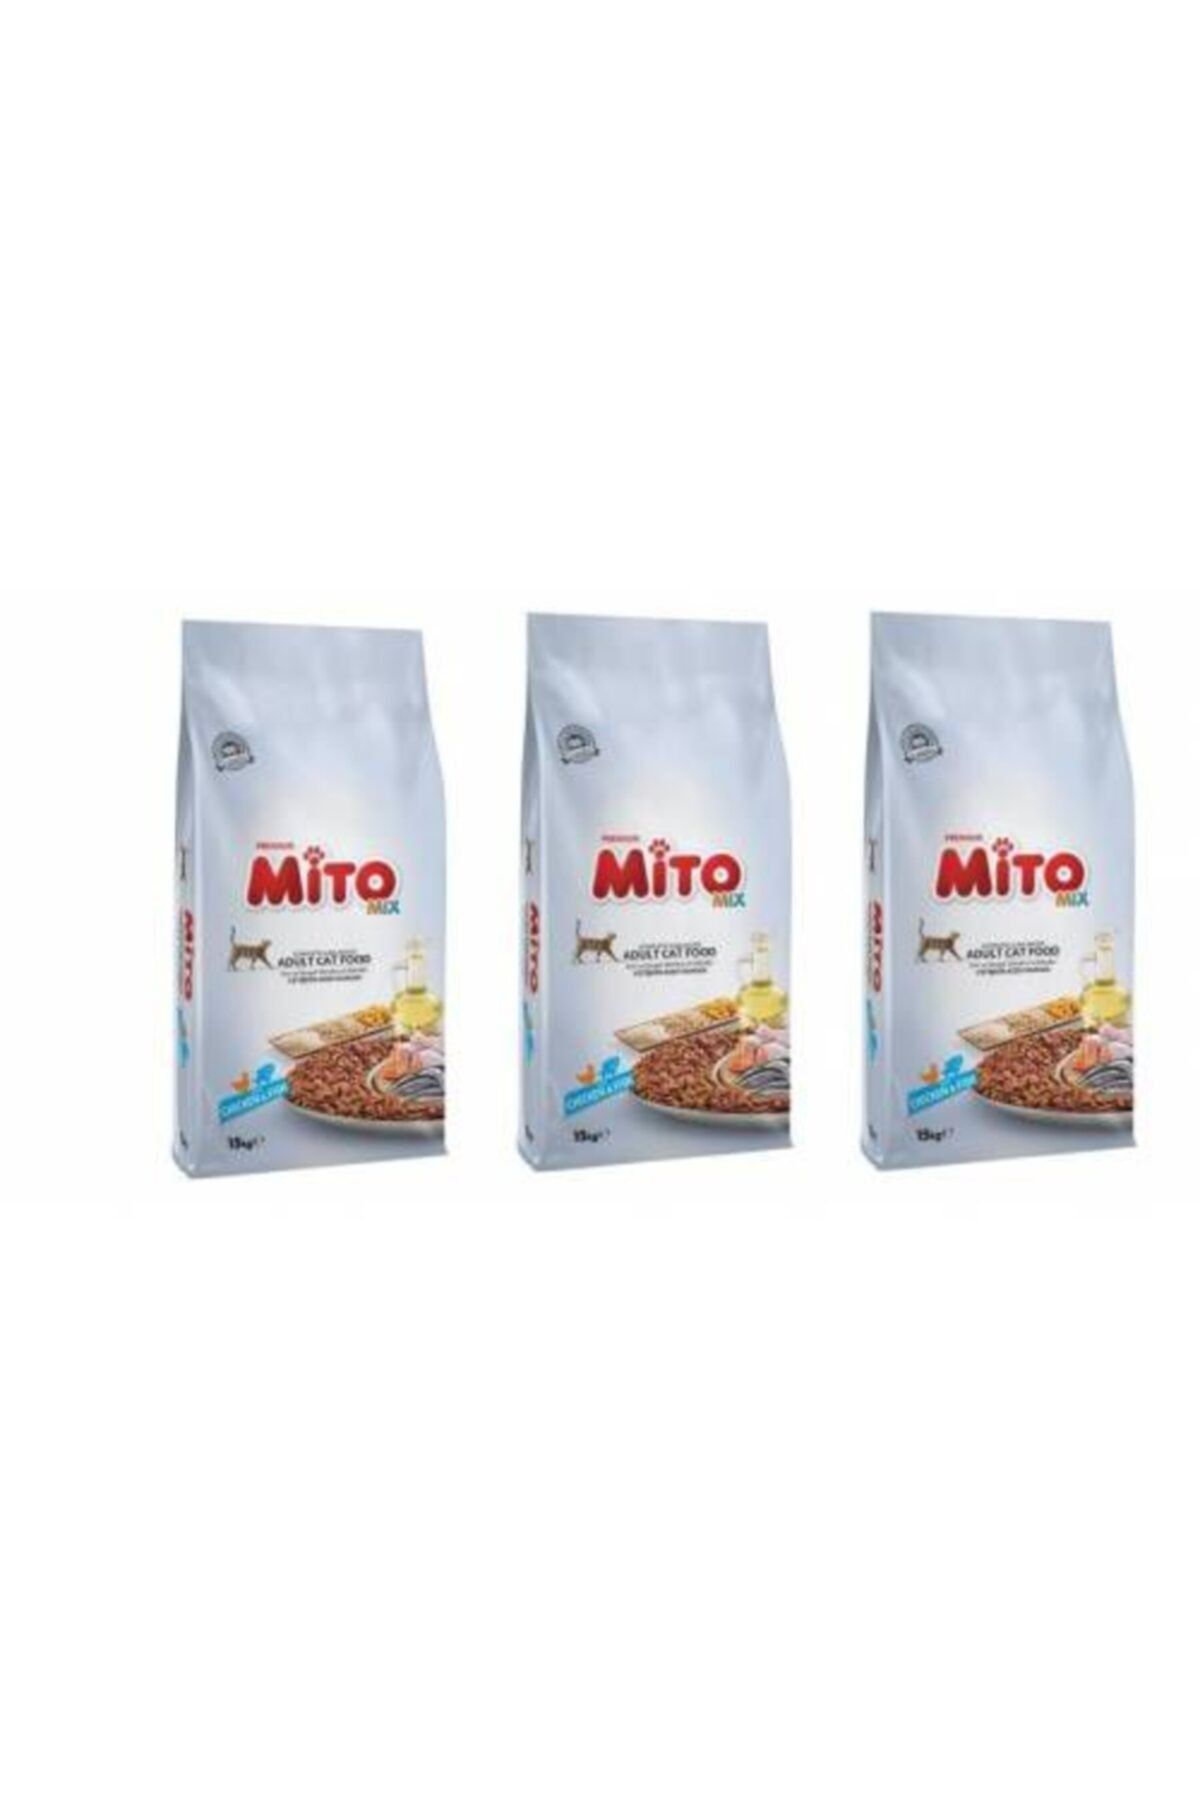 Mito Mix Adult Cat Tavuklu Ve Balıklı Renkli Taneli Kedi Maması 1 X 3 Kg Kapalı Paket